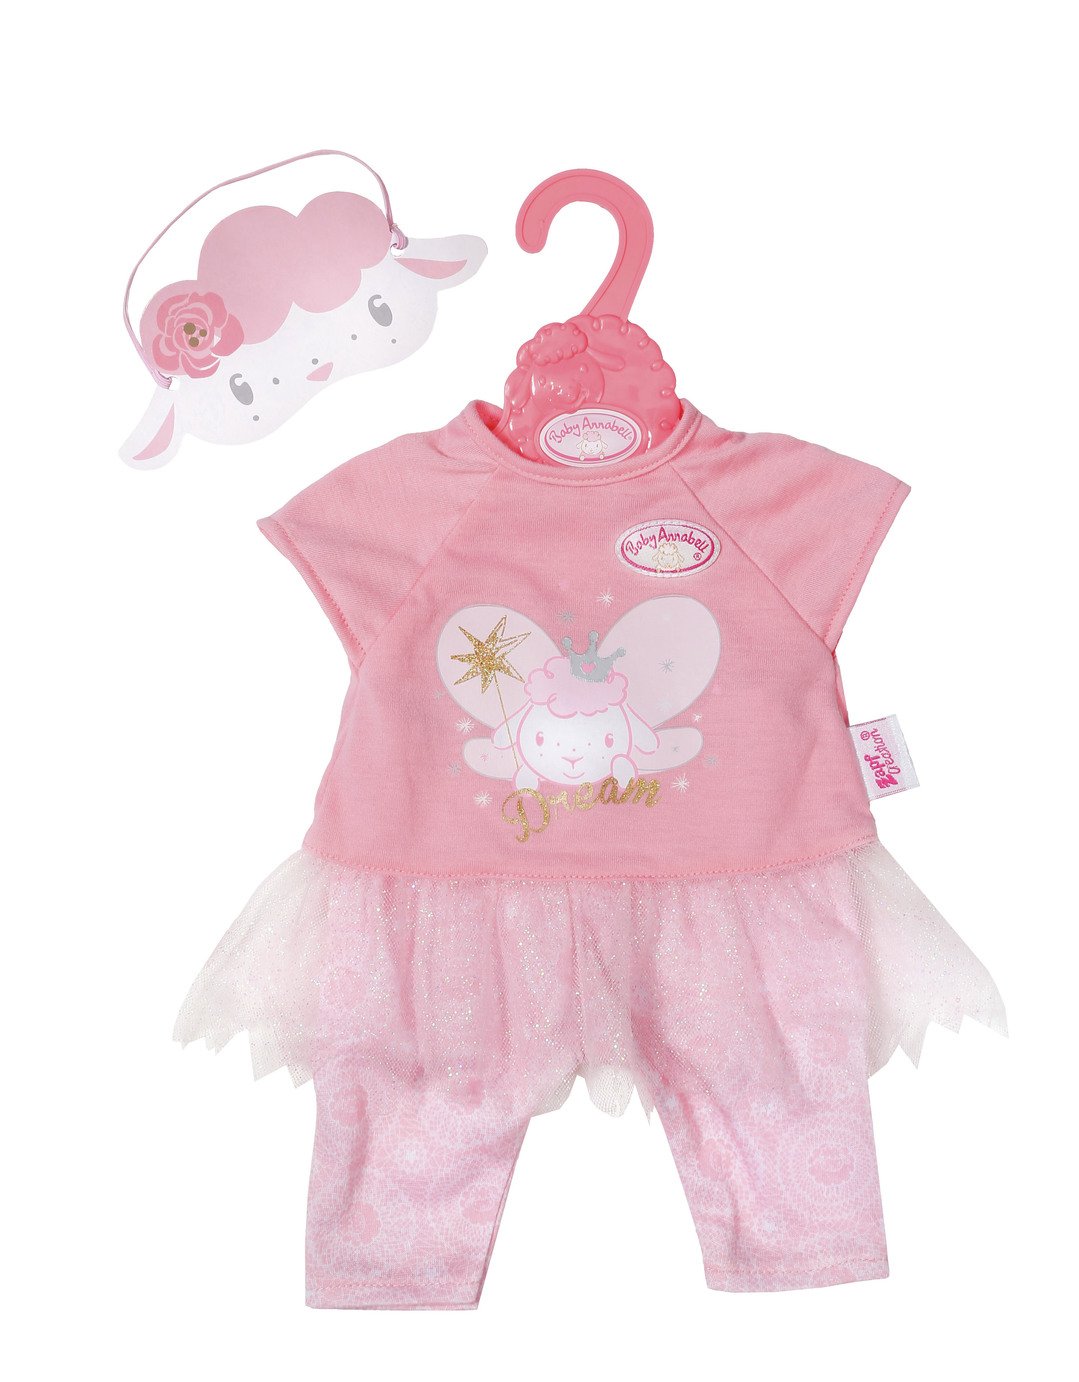 Baby Annabell Sweet Dreams Vêtements/Outfit Set-Robe Chapeau & Chaussures Entièrement neuf dans sa boîte ZAPF 